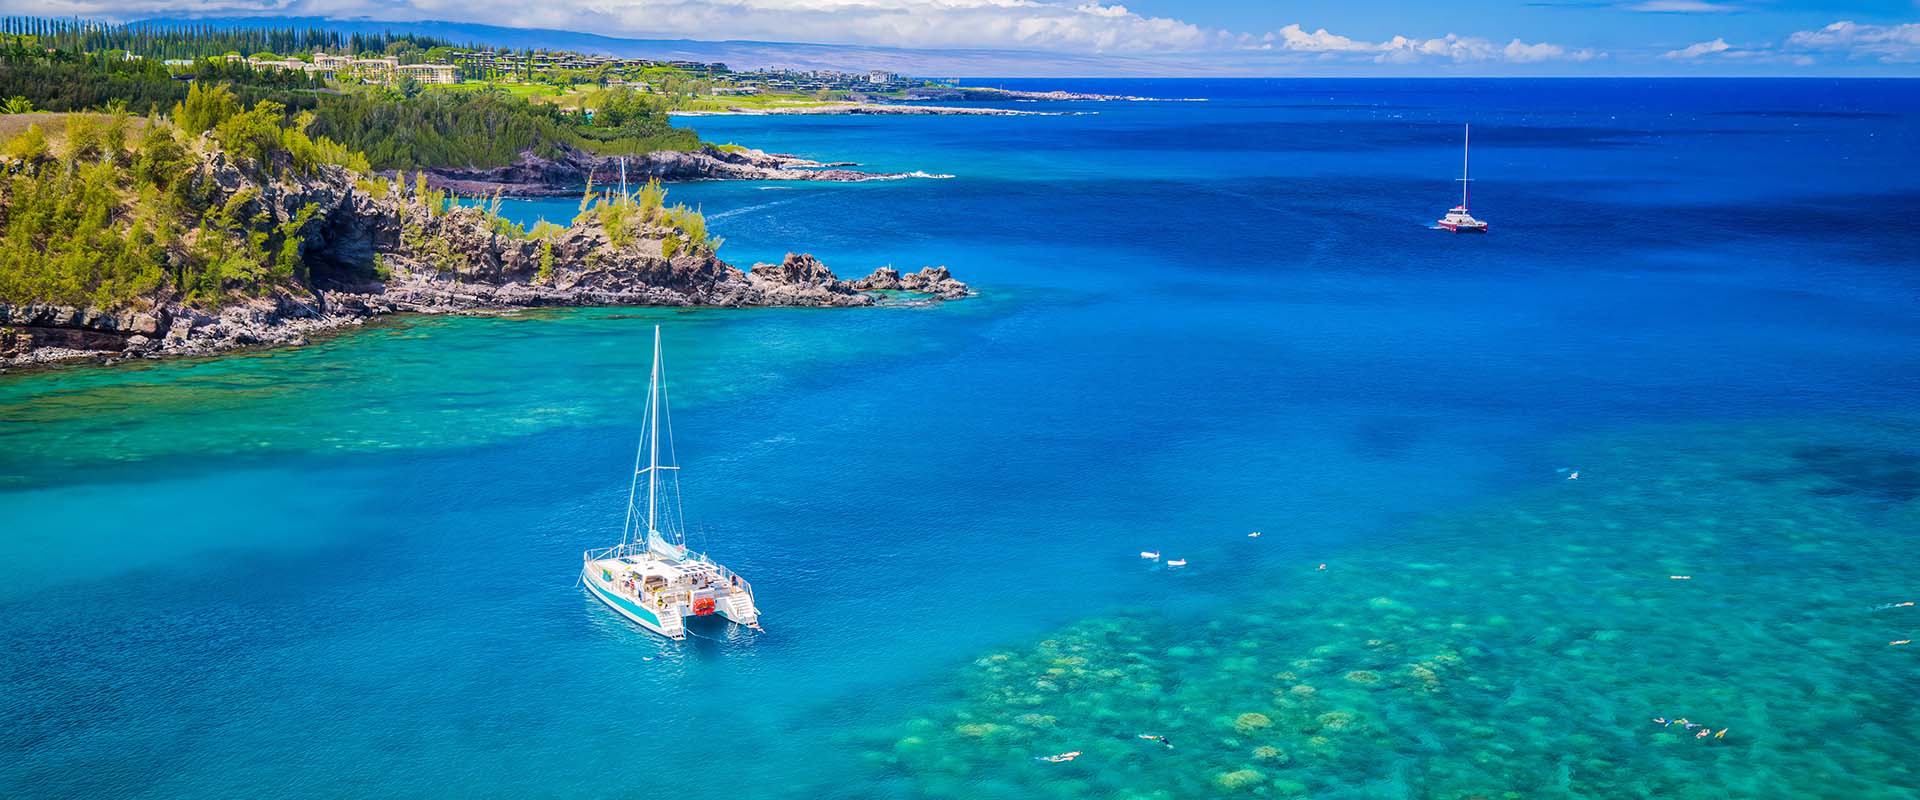 Adventure Cruise Ships in Hawaii - LiveAboard.com